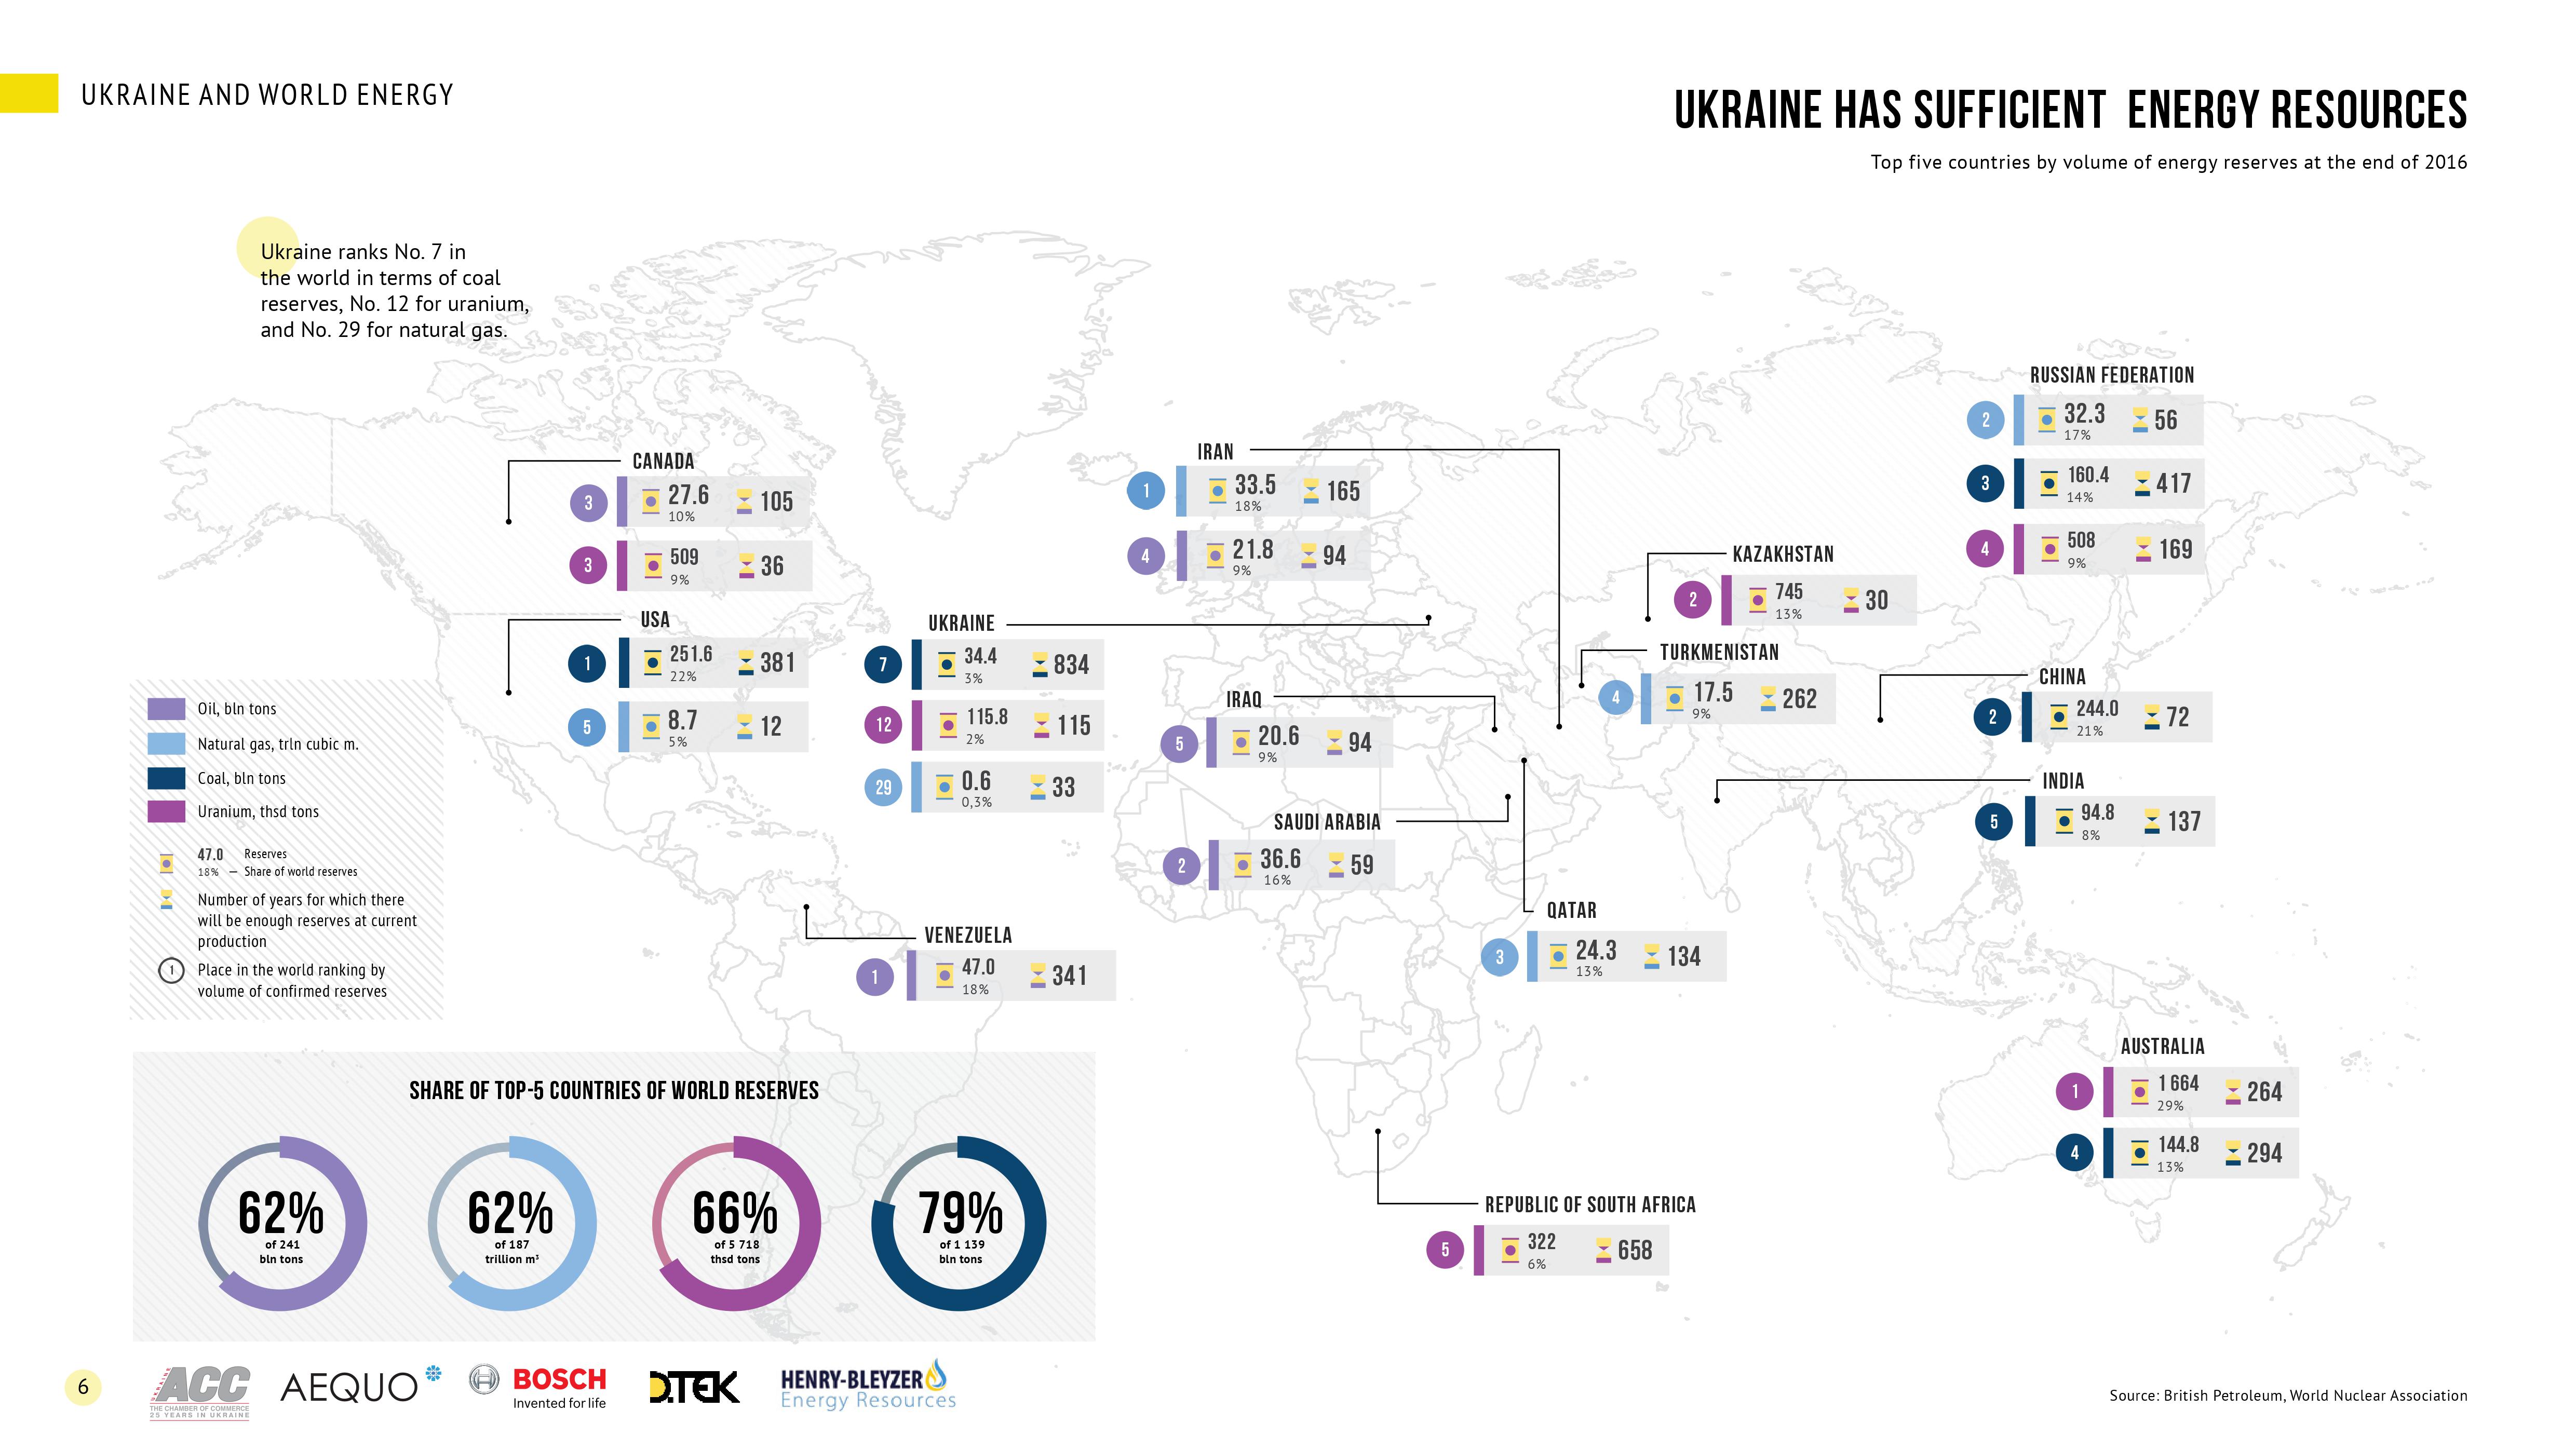 Ukraine has sufficient energy resources